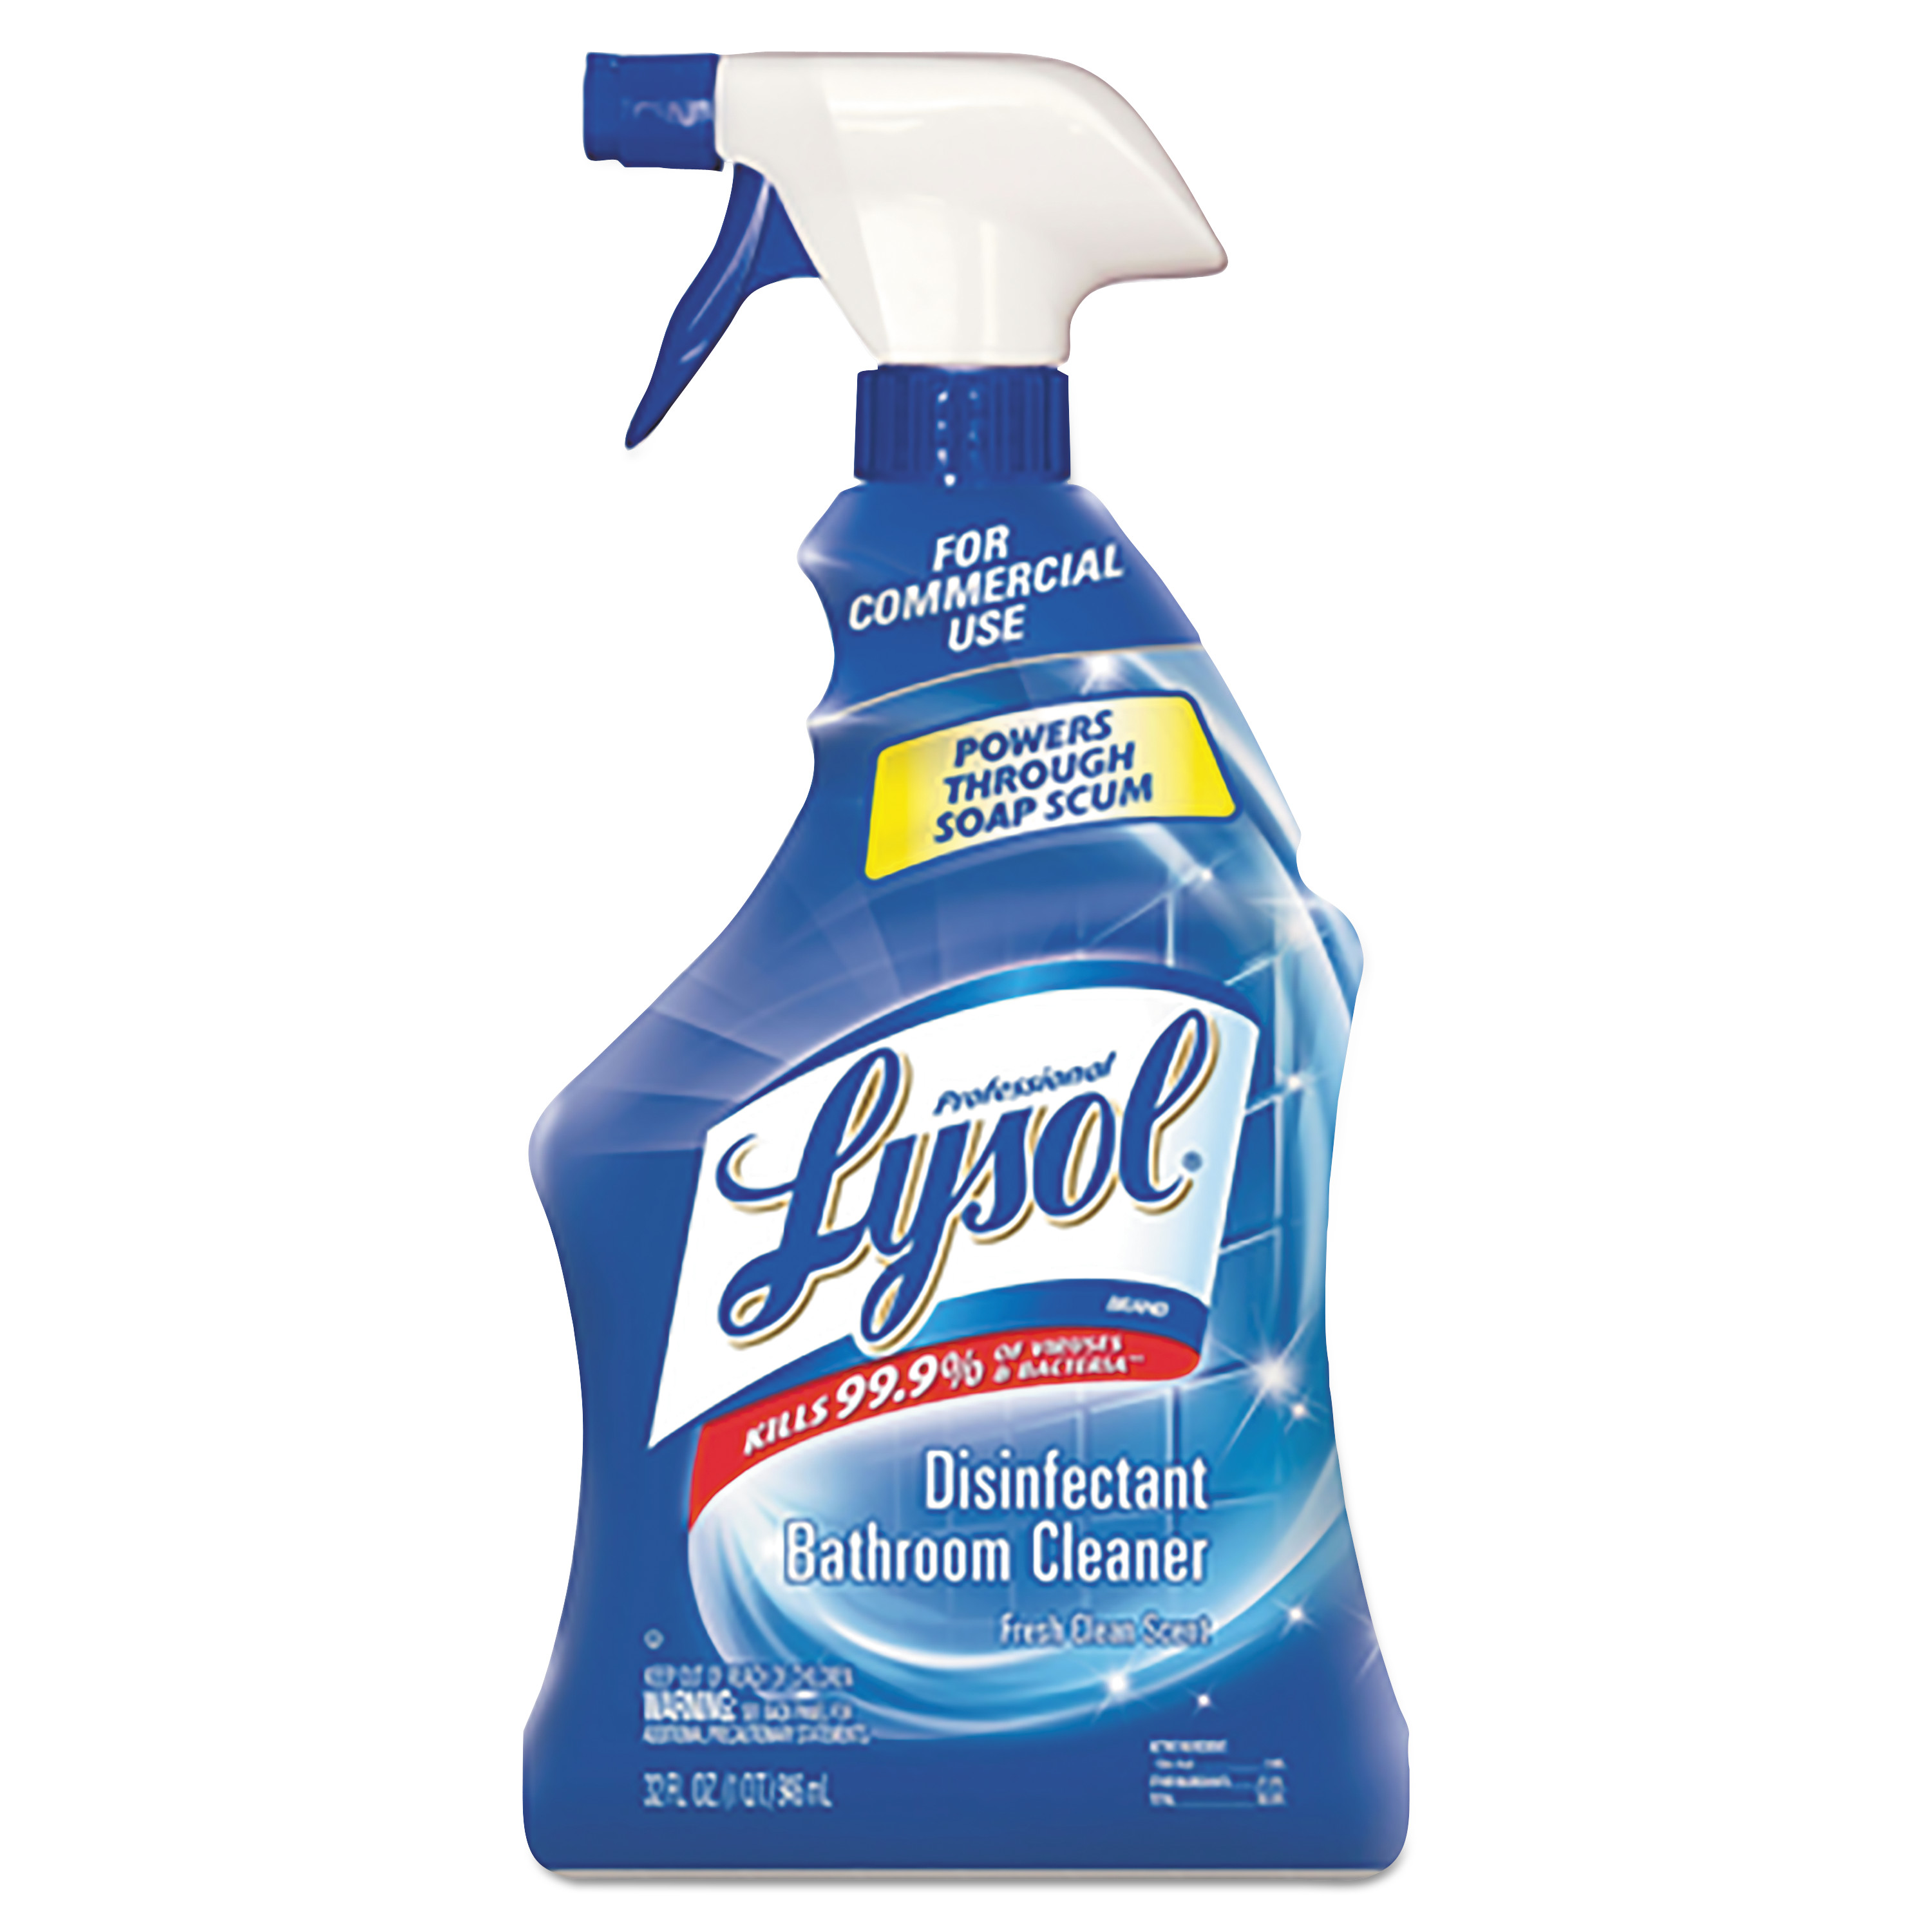  Professional LYSOL Brand 36241-04685 Disinfectant Bathroom Cleaner, 32oz Spray Bottle (RAC04685EA) 